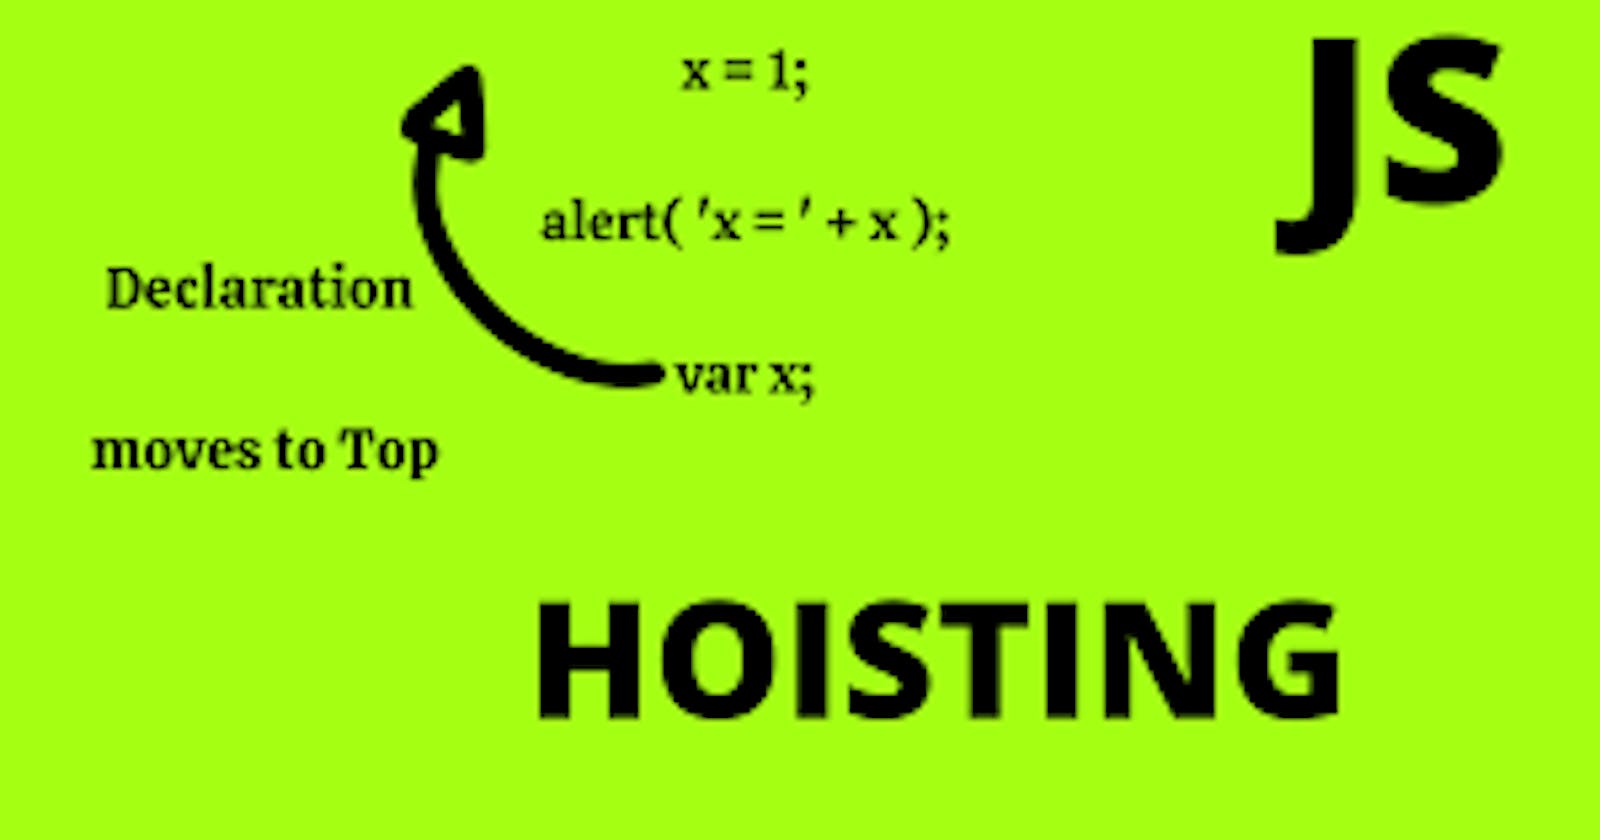 Hoisting